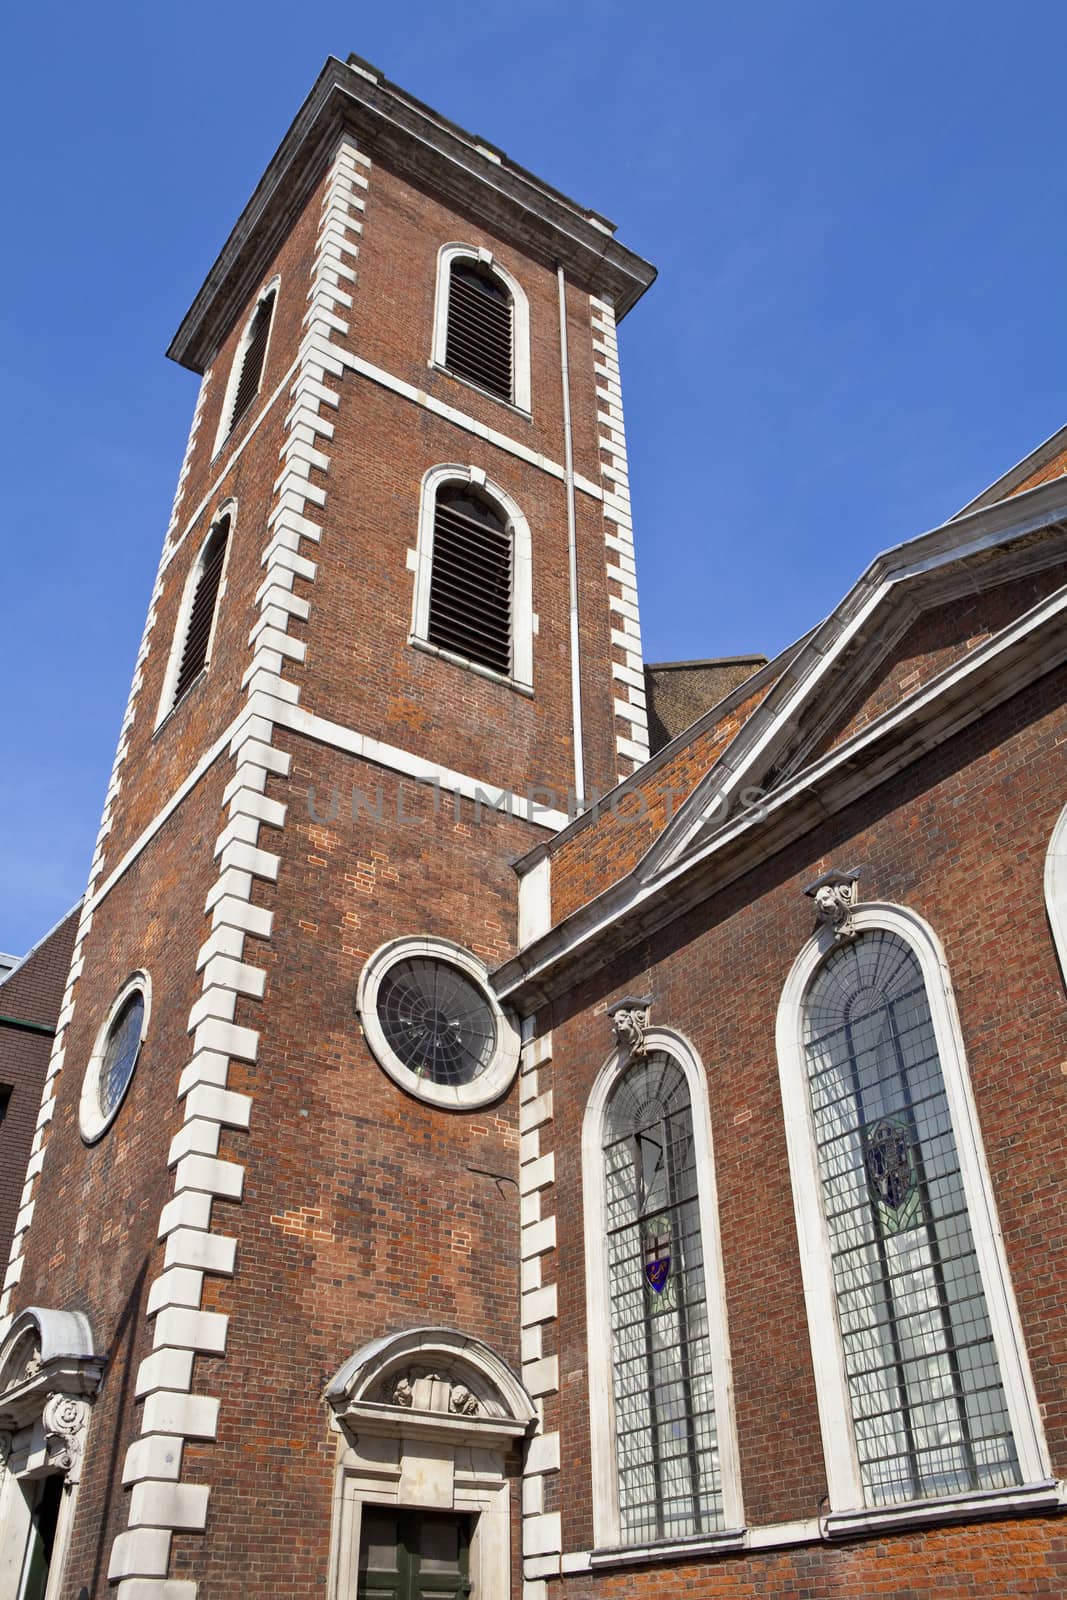 St. Thomas' Church in London by chrisdorney